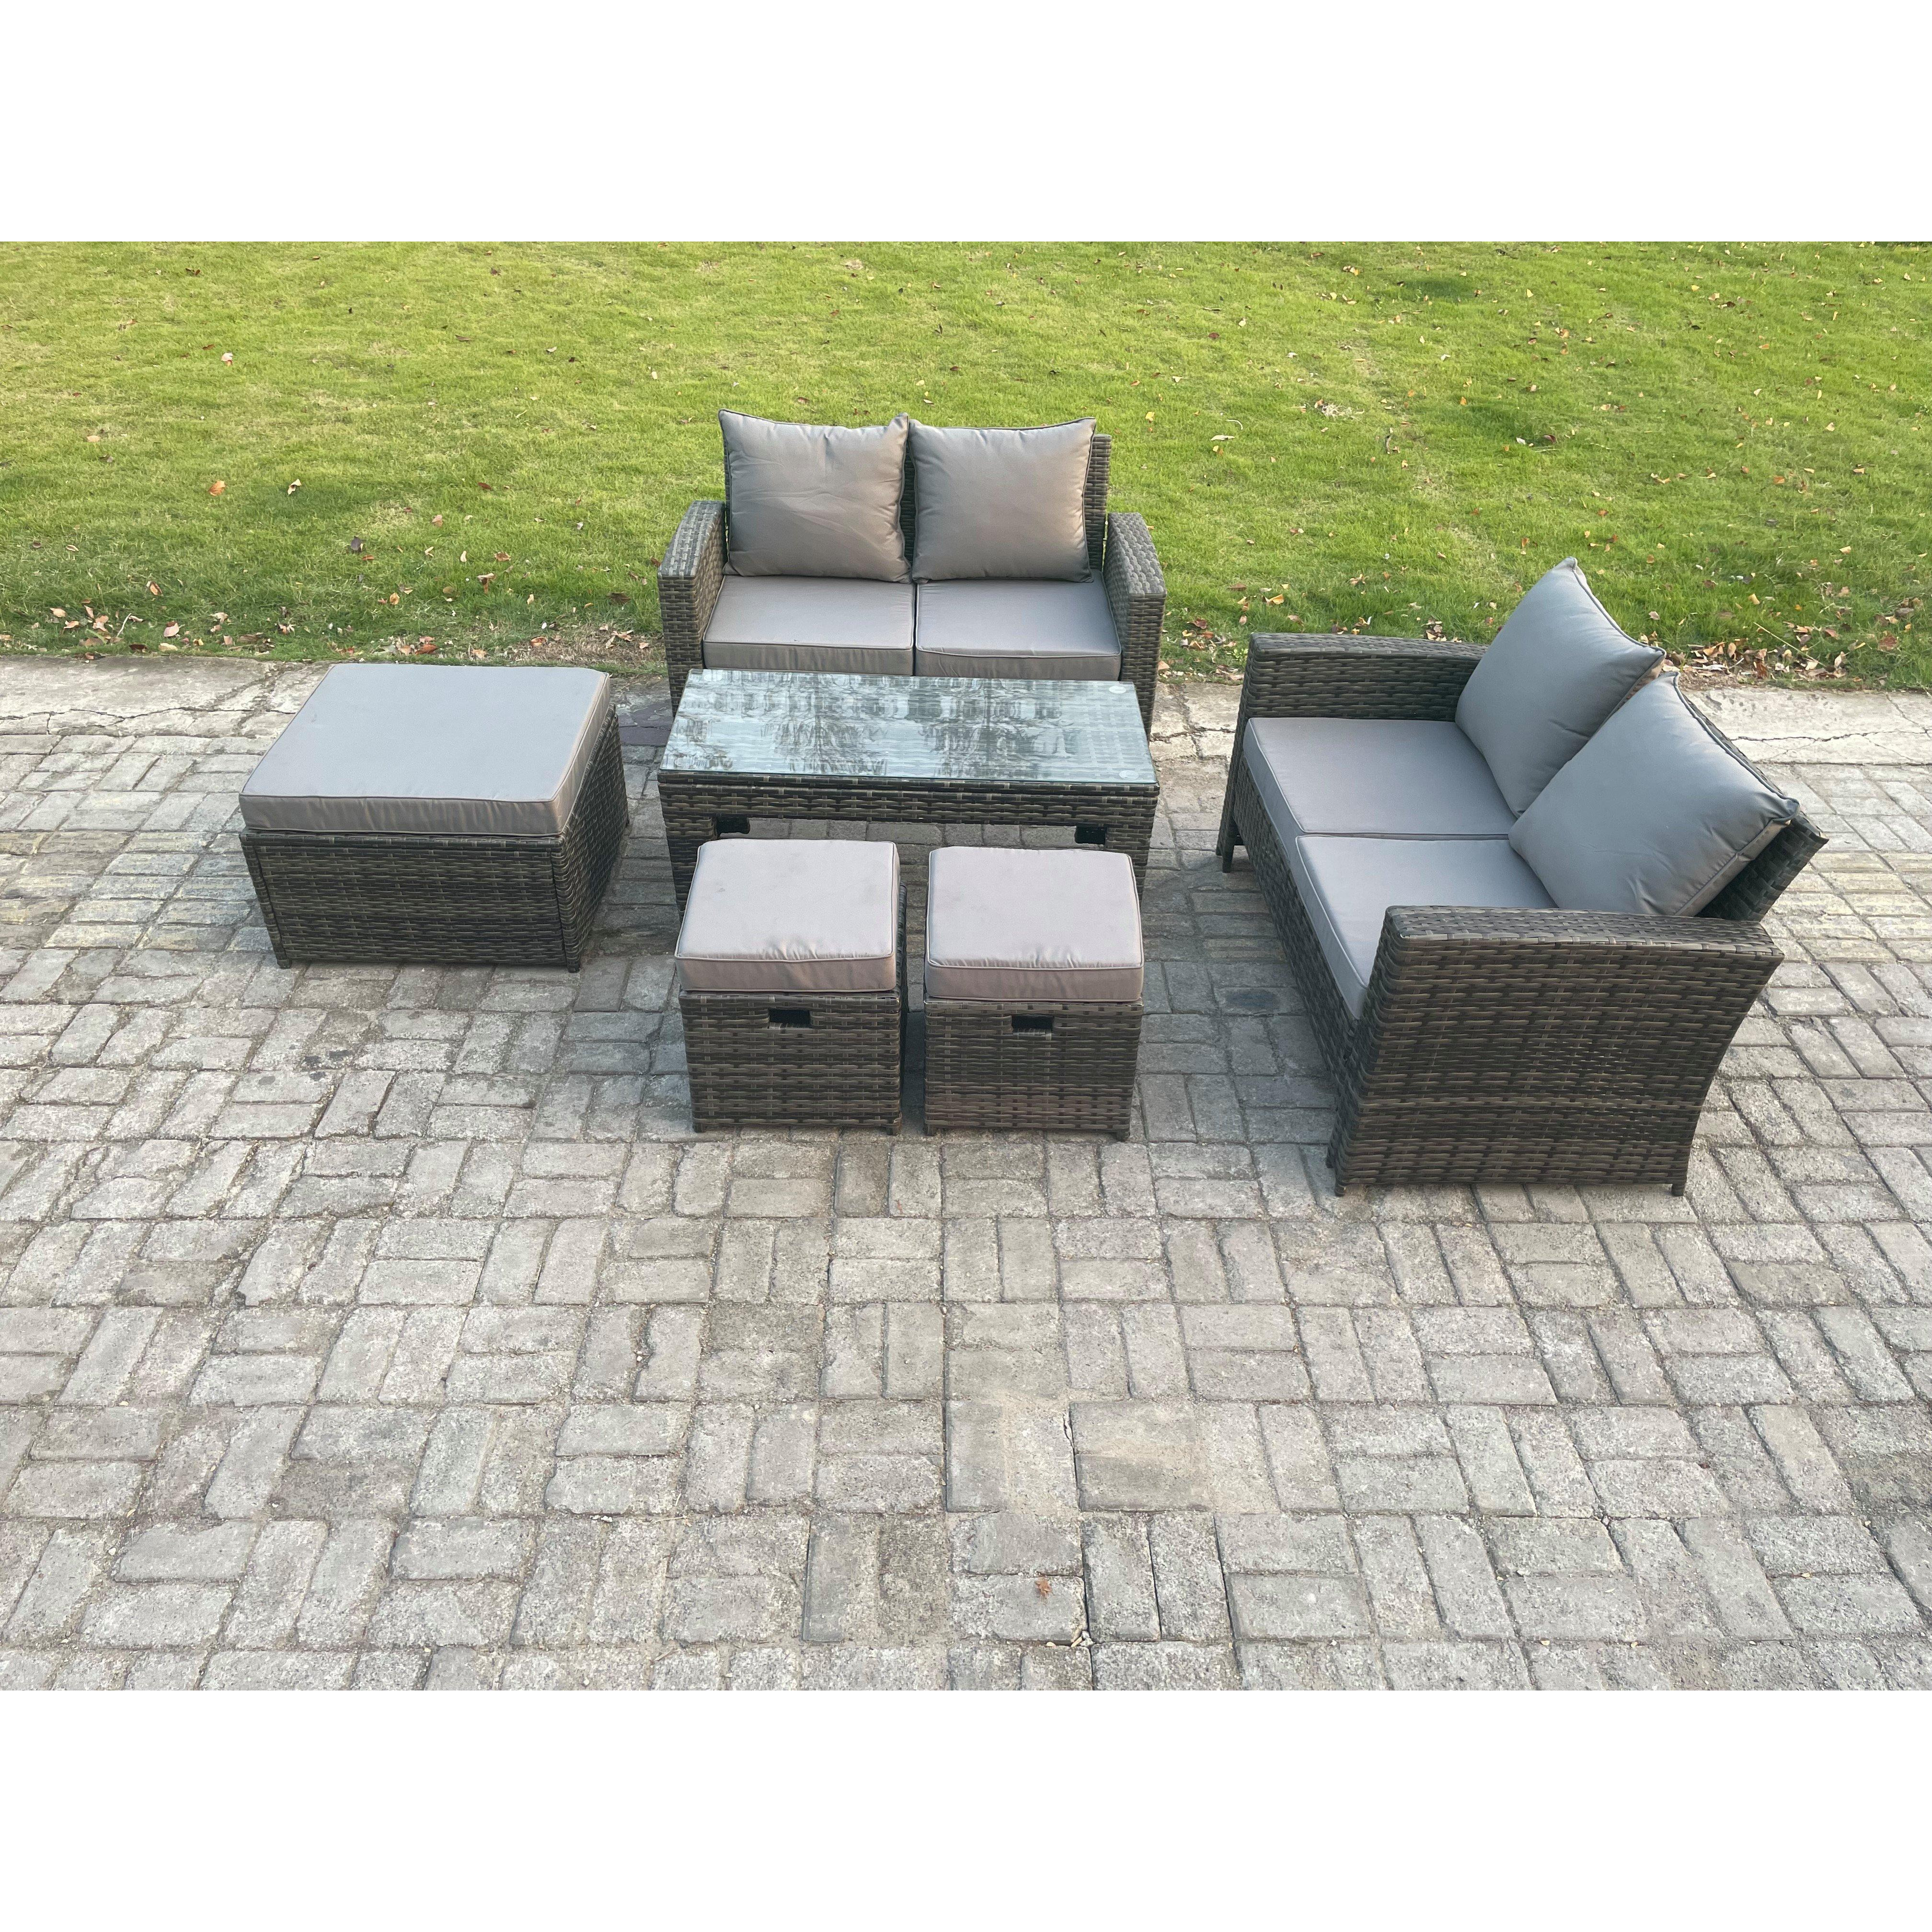 7 Seater High Back Rattan Garden Furniture Sofa Sets with Rectangular Coffee Table 3 Footstools Loveseat Sofa Dark Grey Mixed - image 1